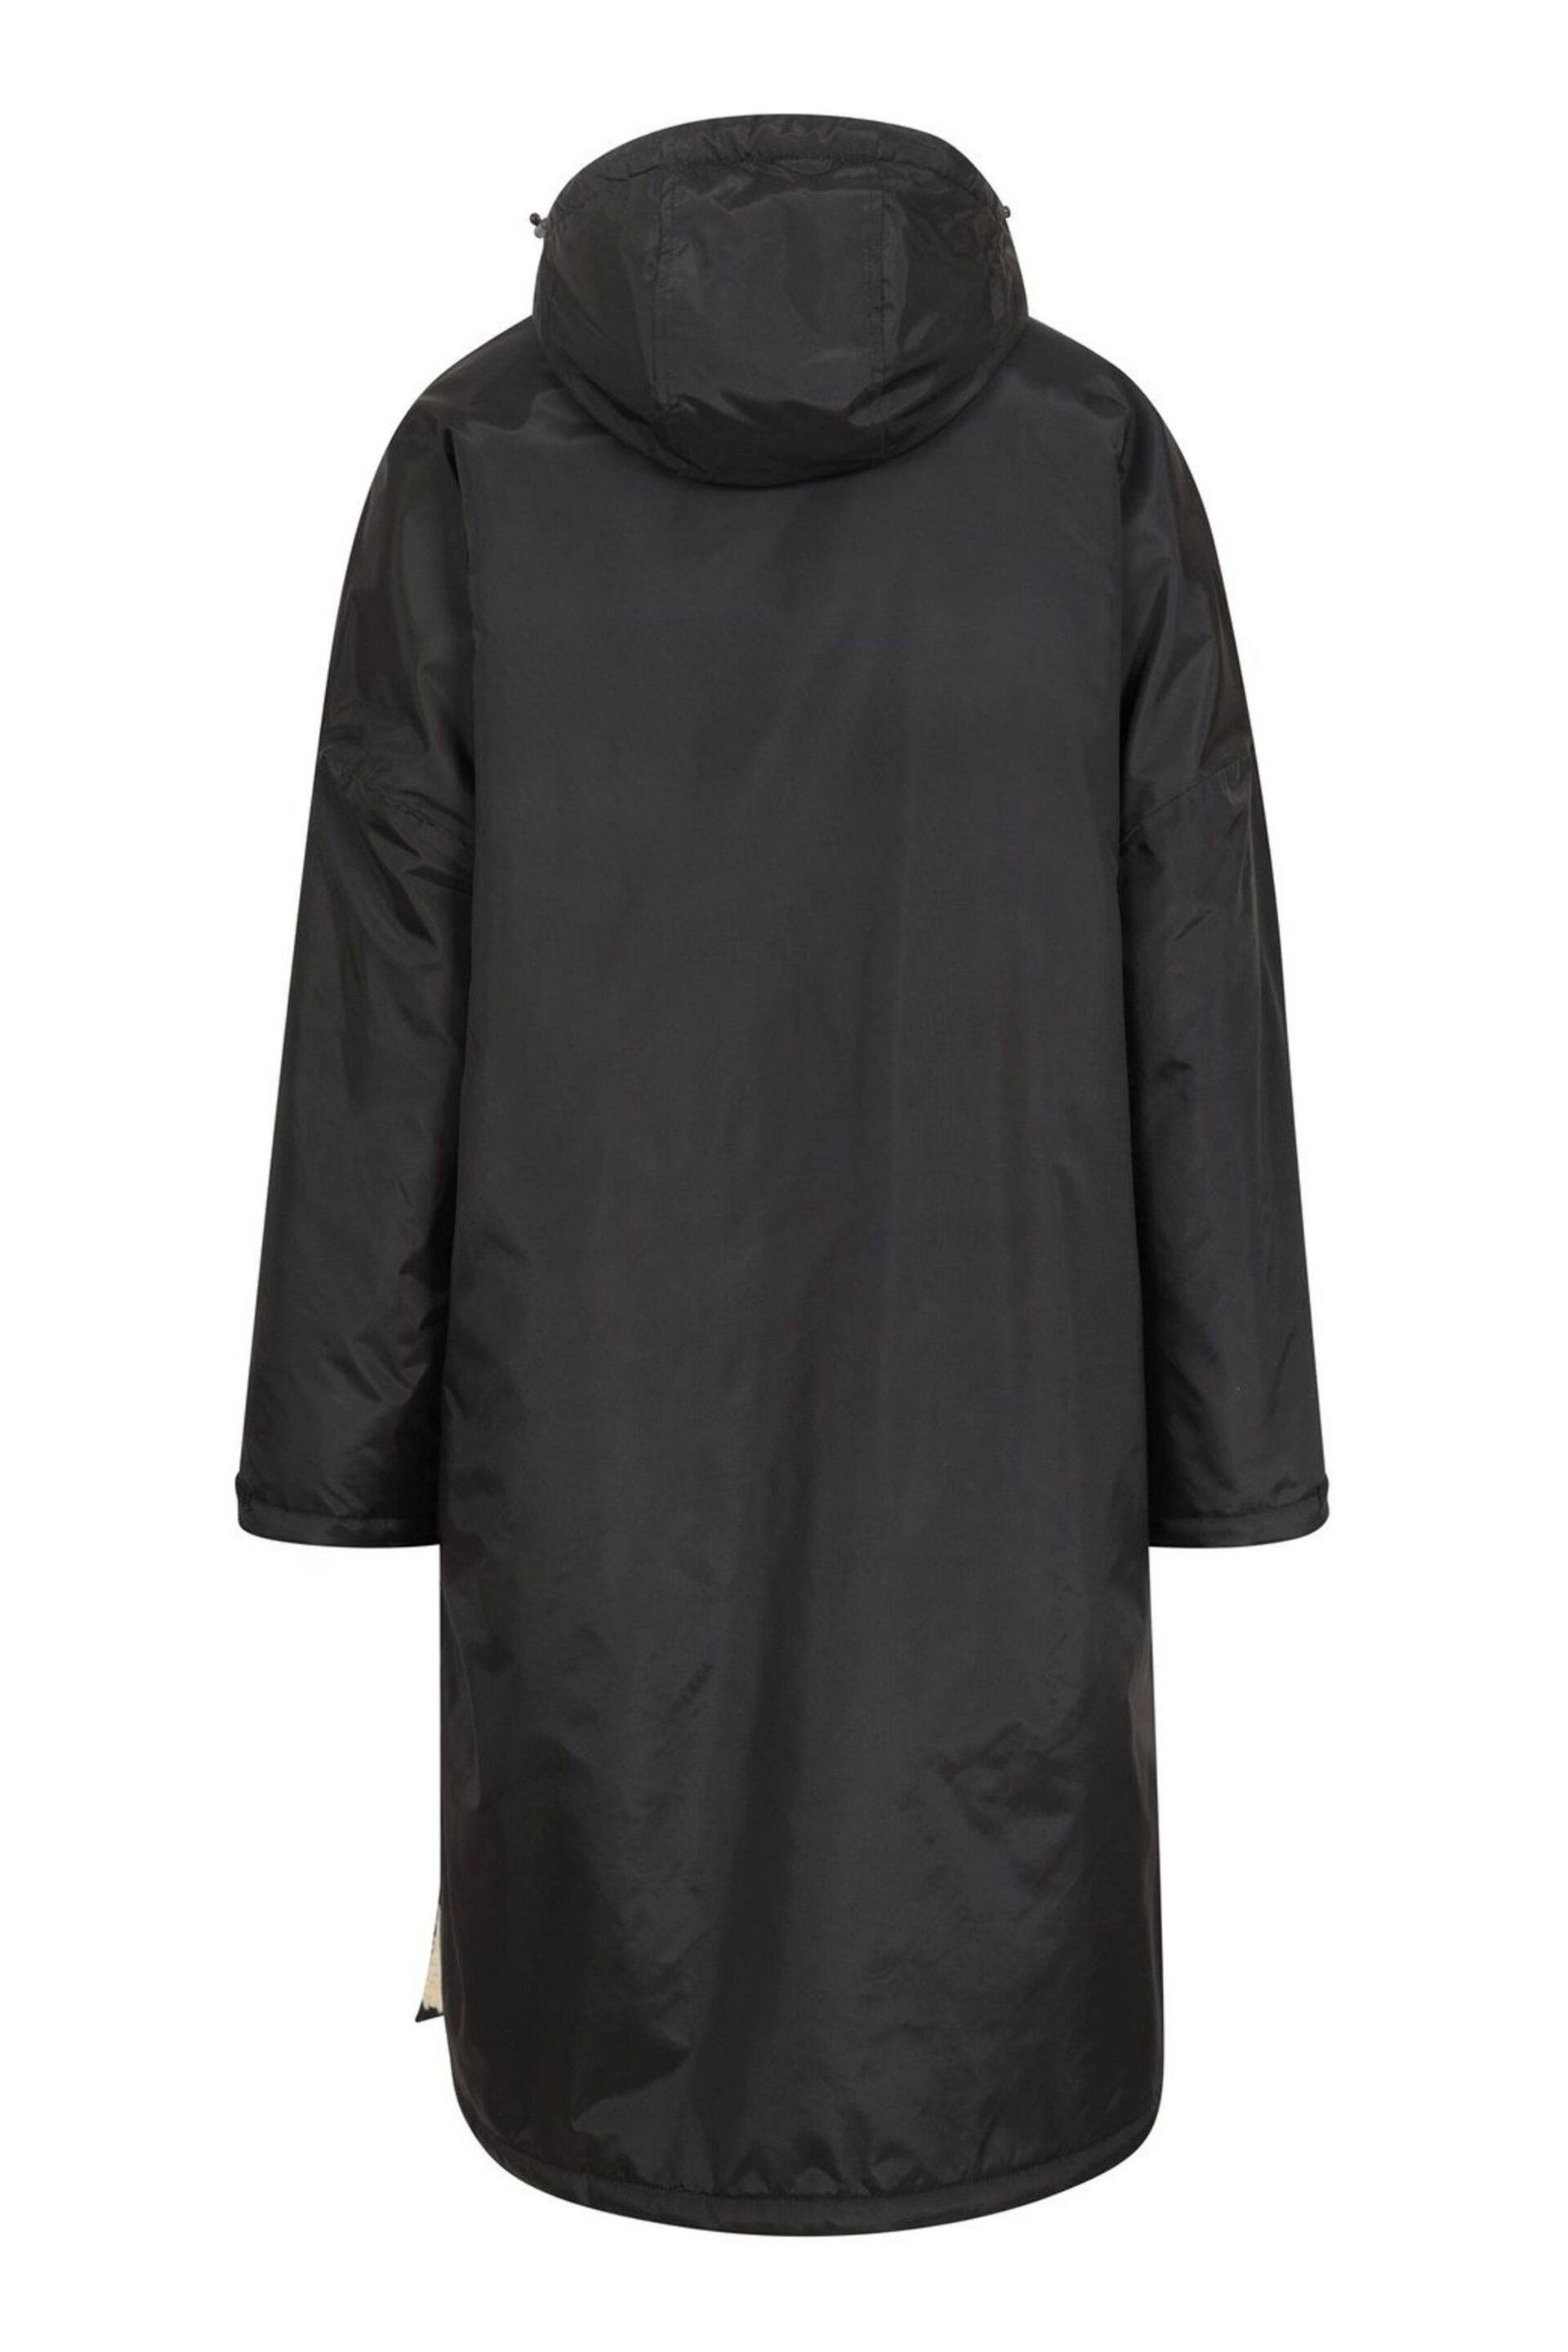 Mountain Warehouse Black Tidal Womens Waterproof Changing Robe - Image 3 of 6